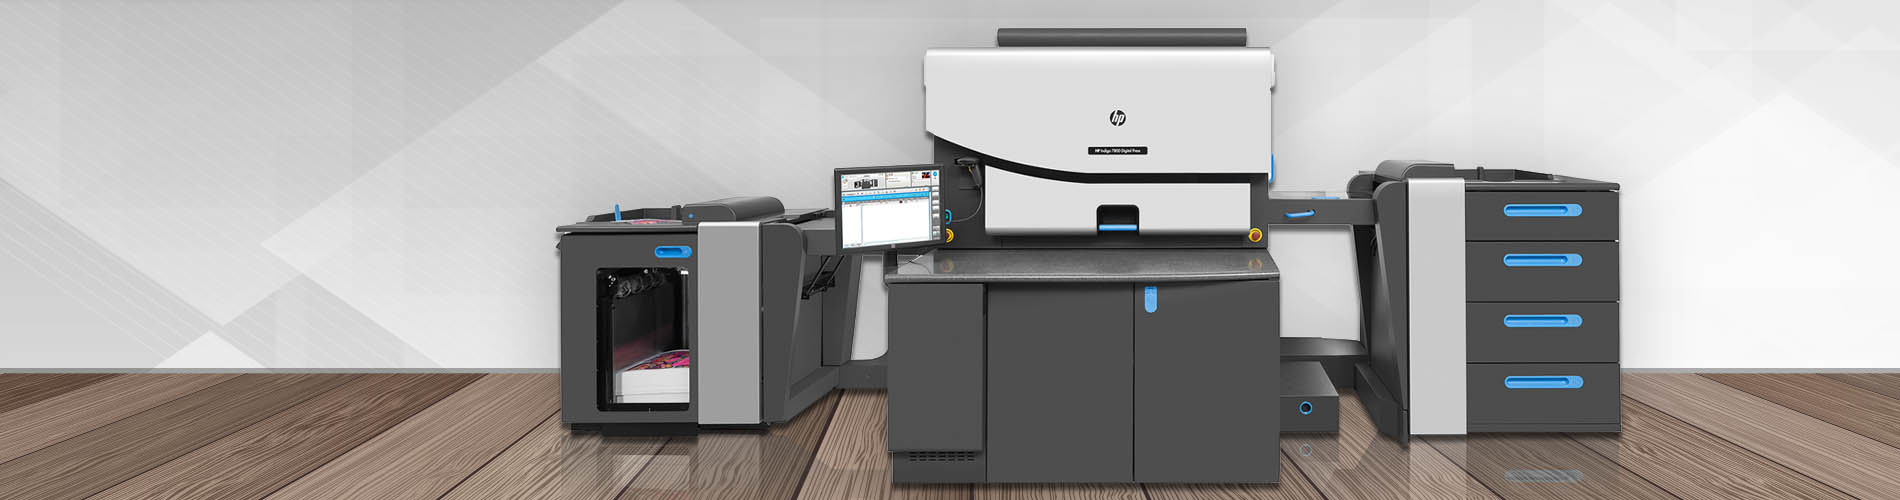 printing equipment supplier